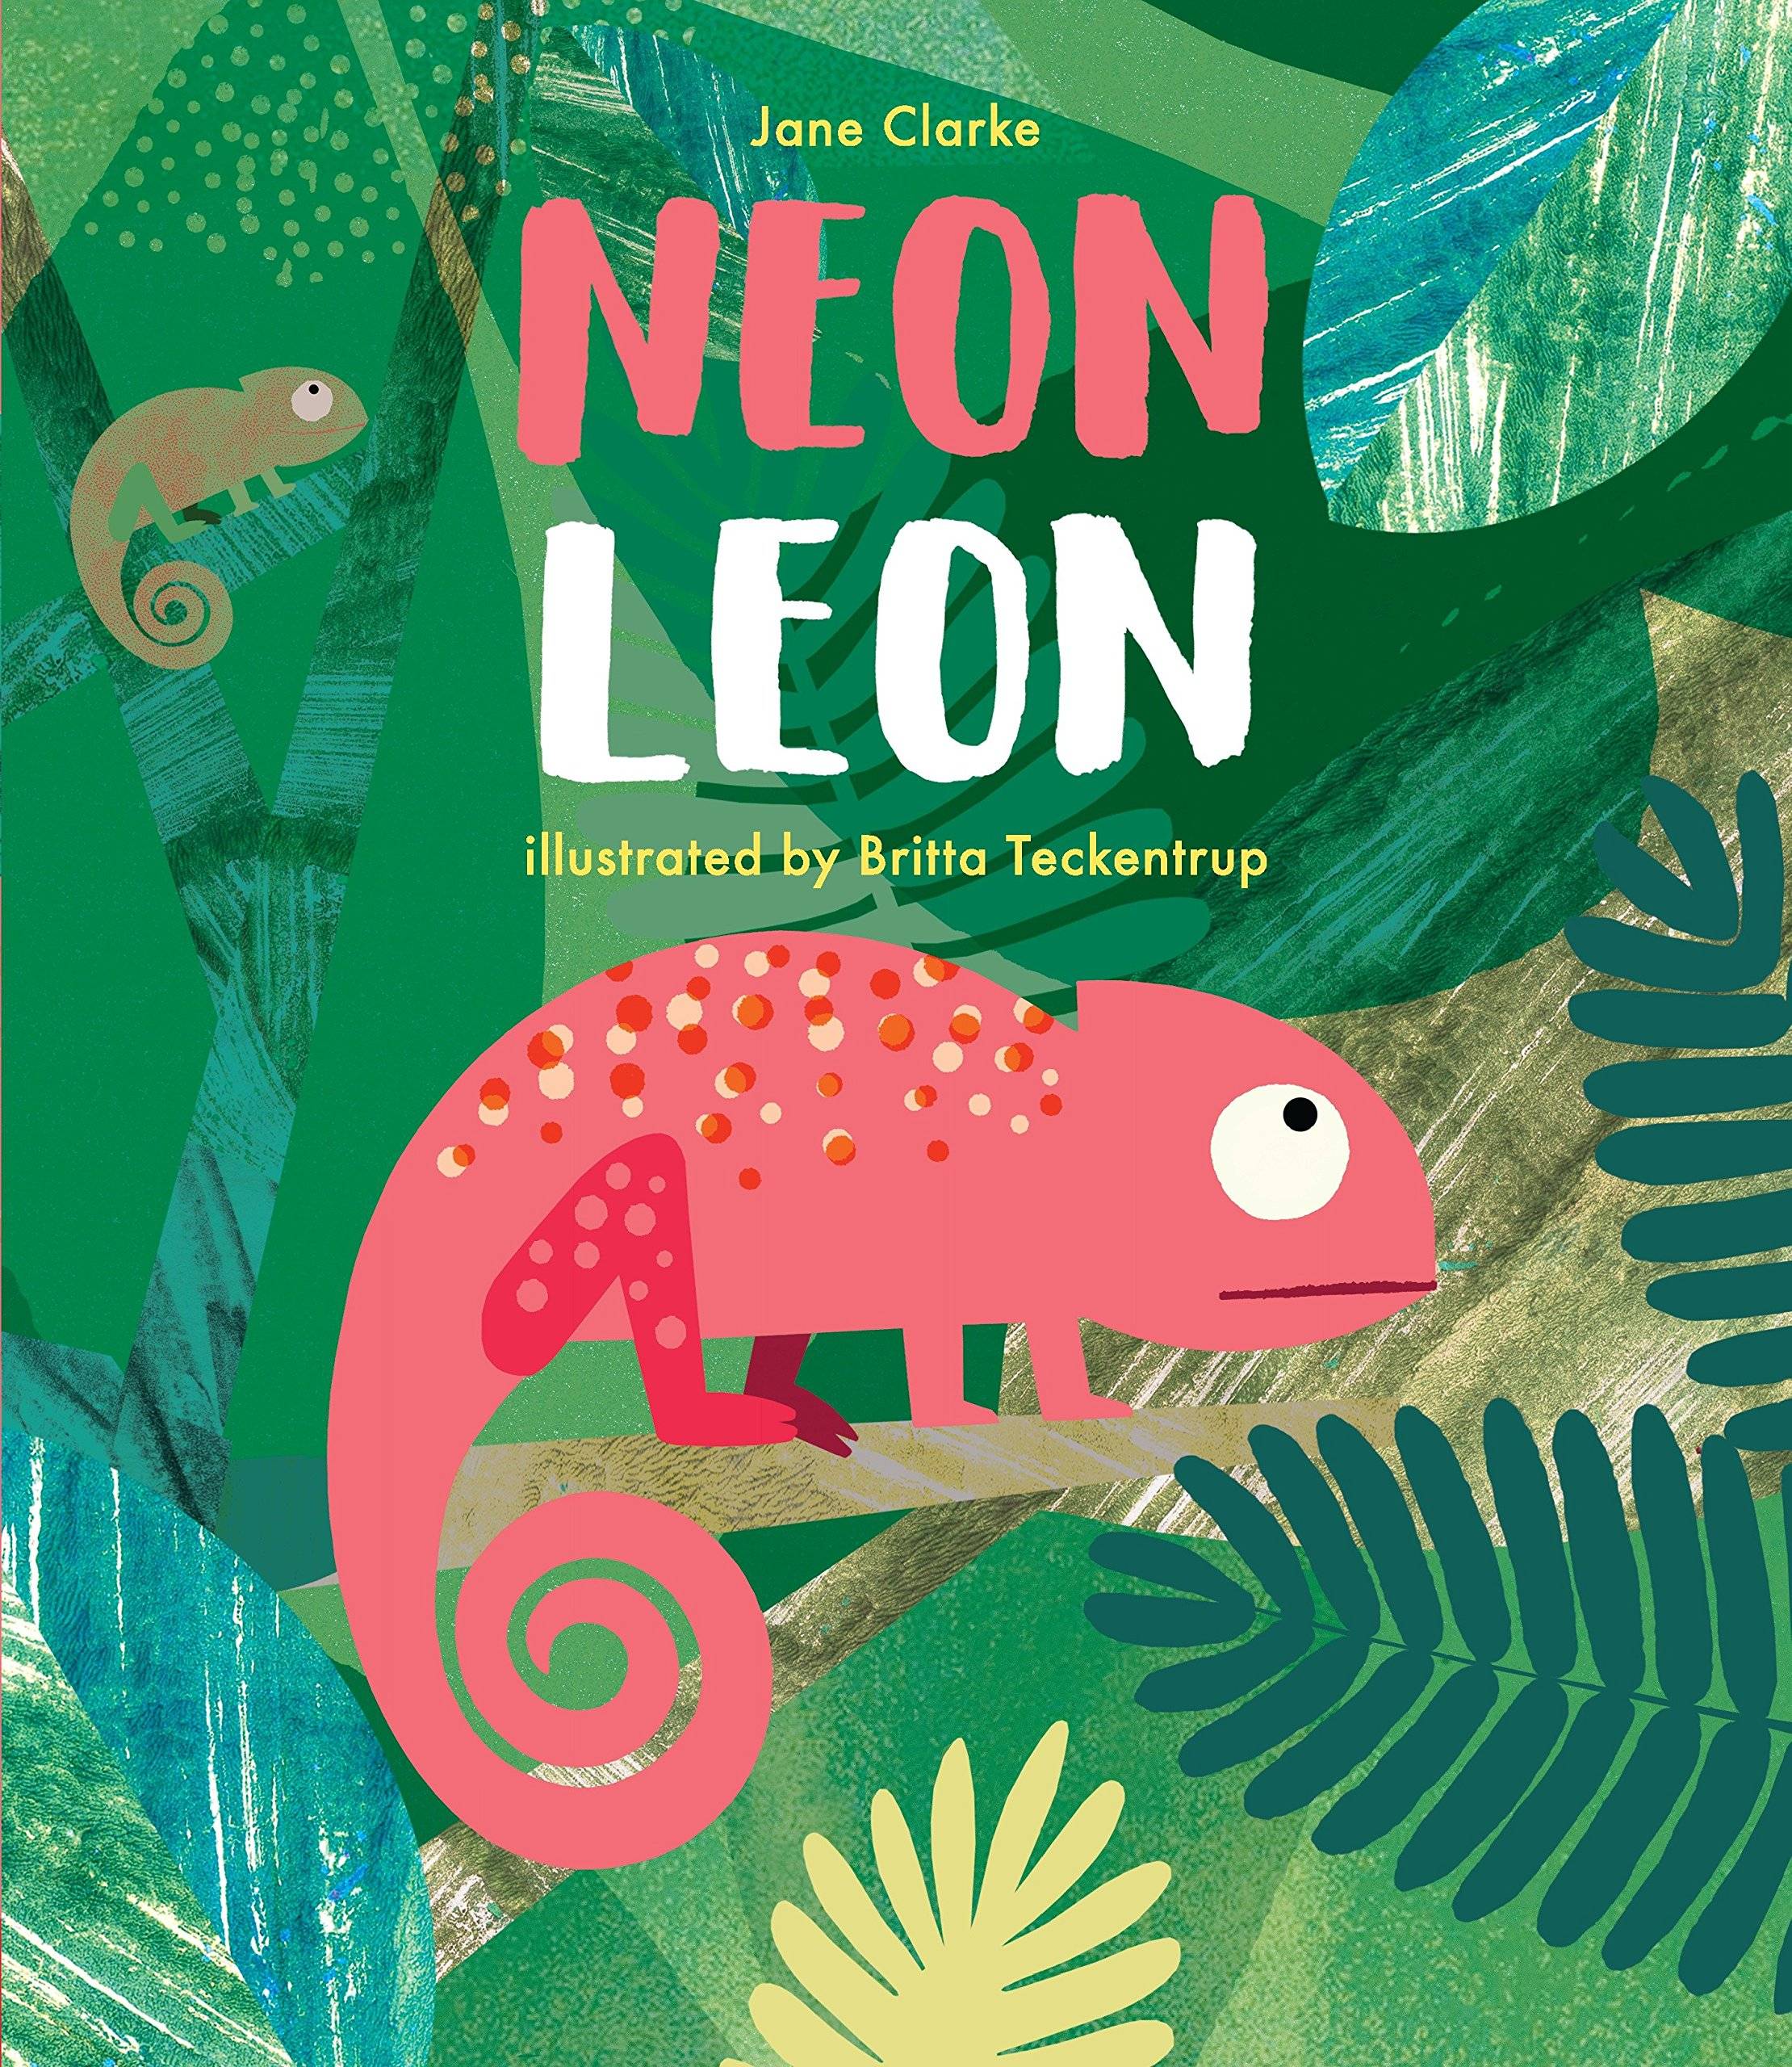 IMG : Neon Leon